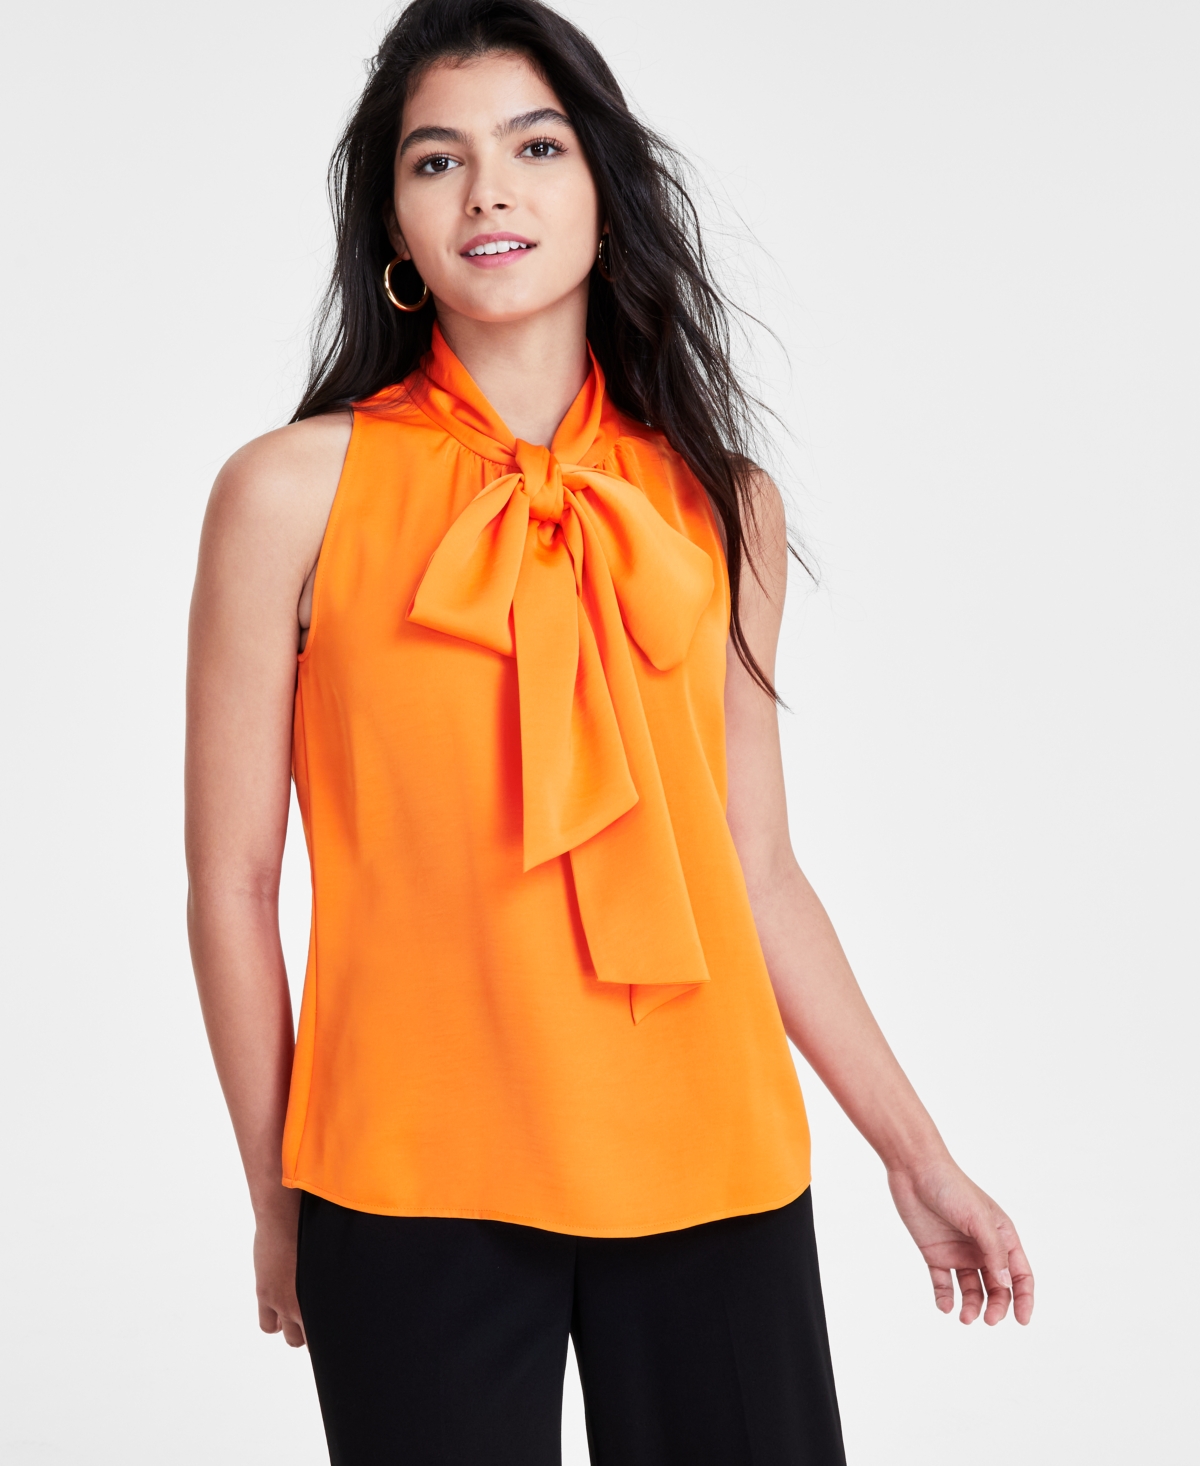 Women's Sleeveless Tie-Neck Blouse, Created for Macy's - Tangerine